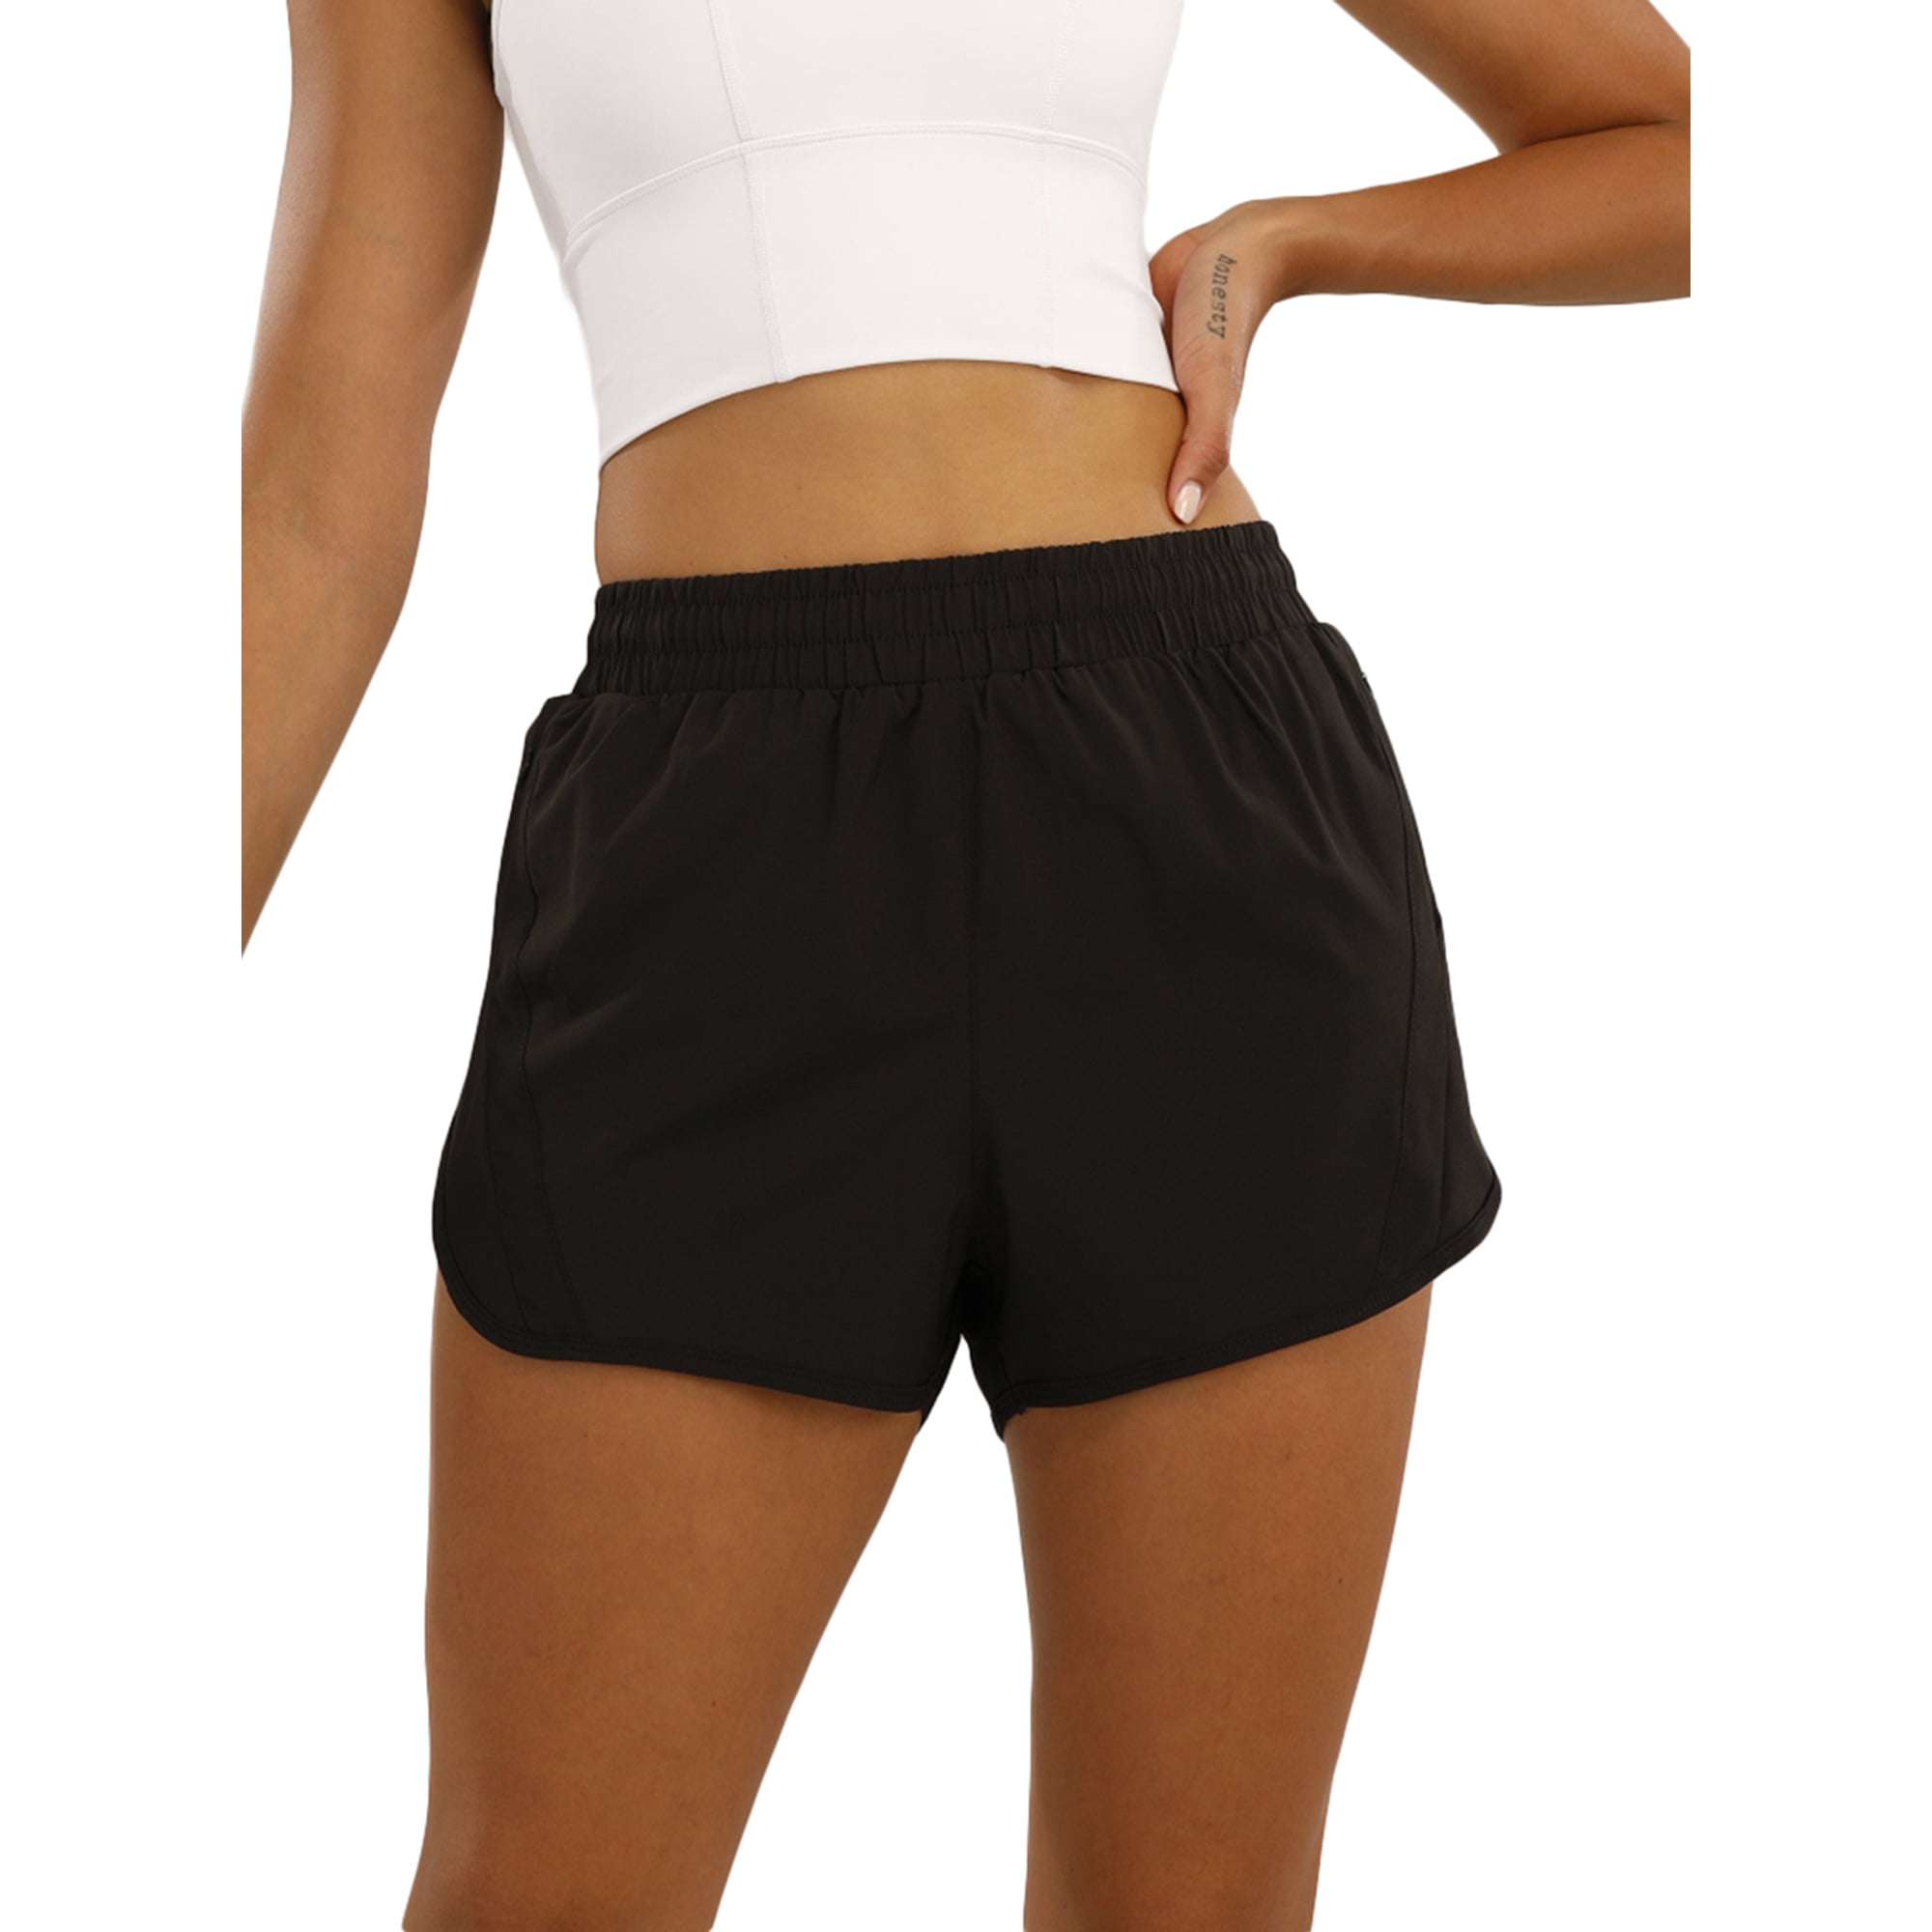 Women's Shorts w/zipper Pockets